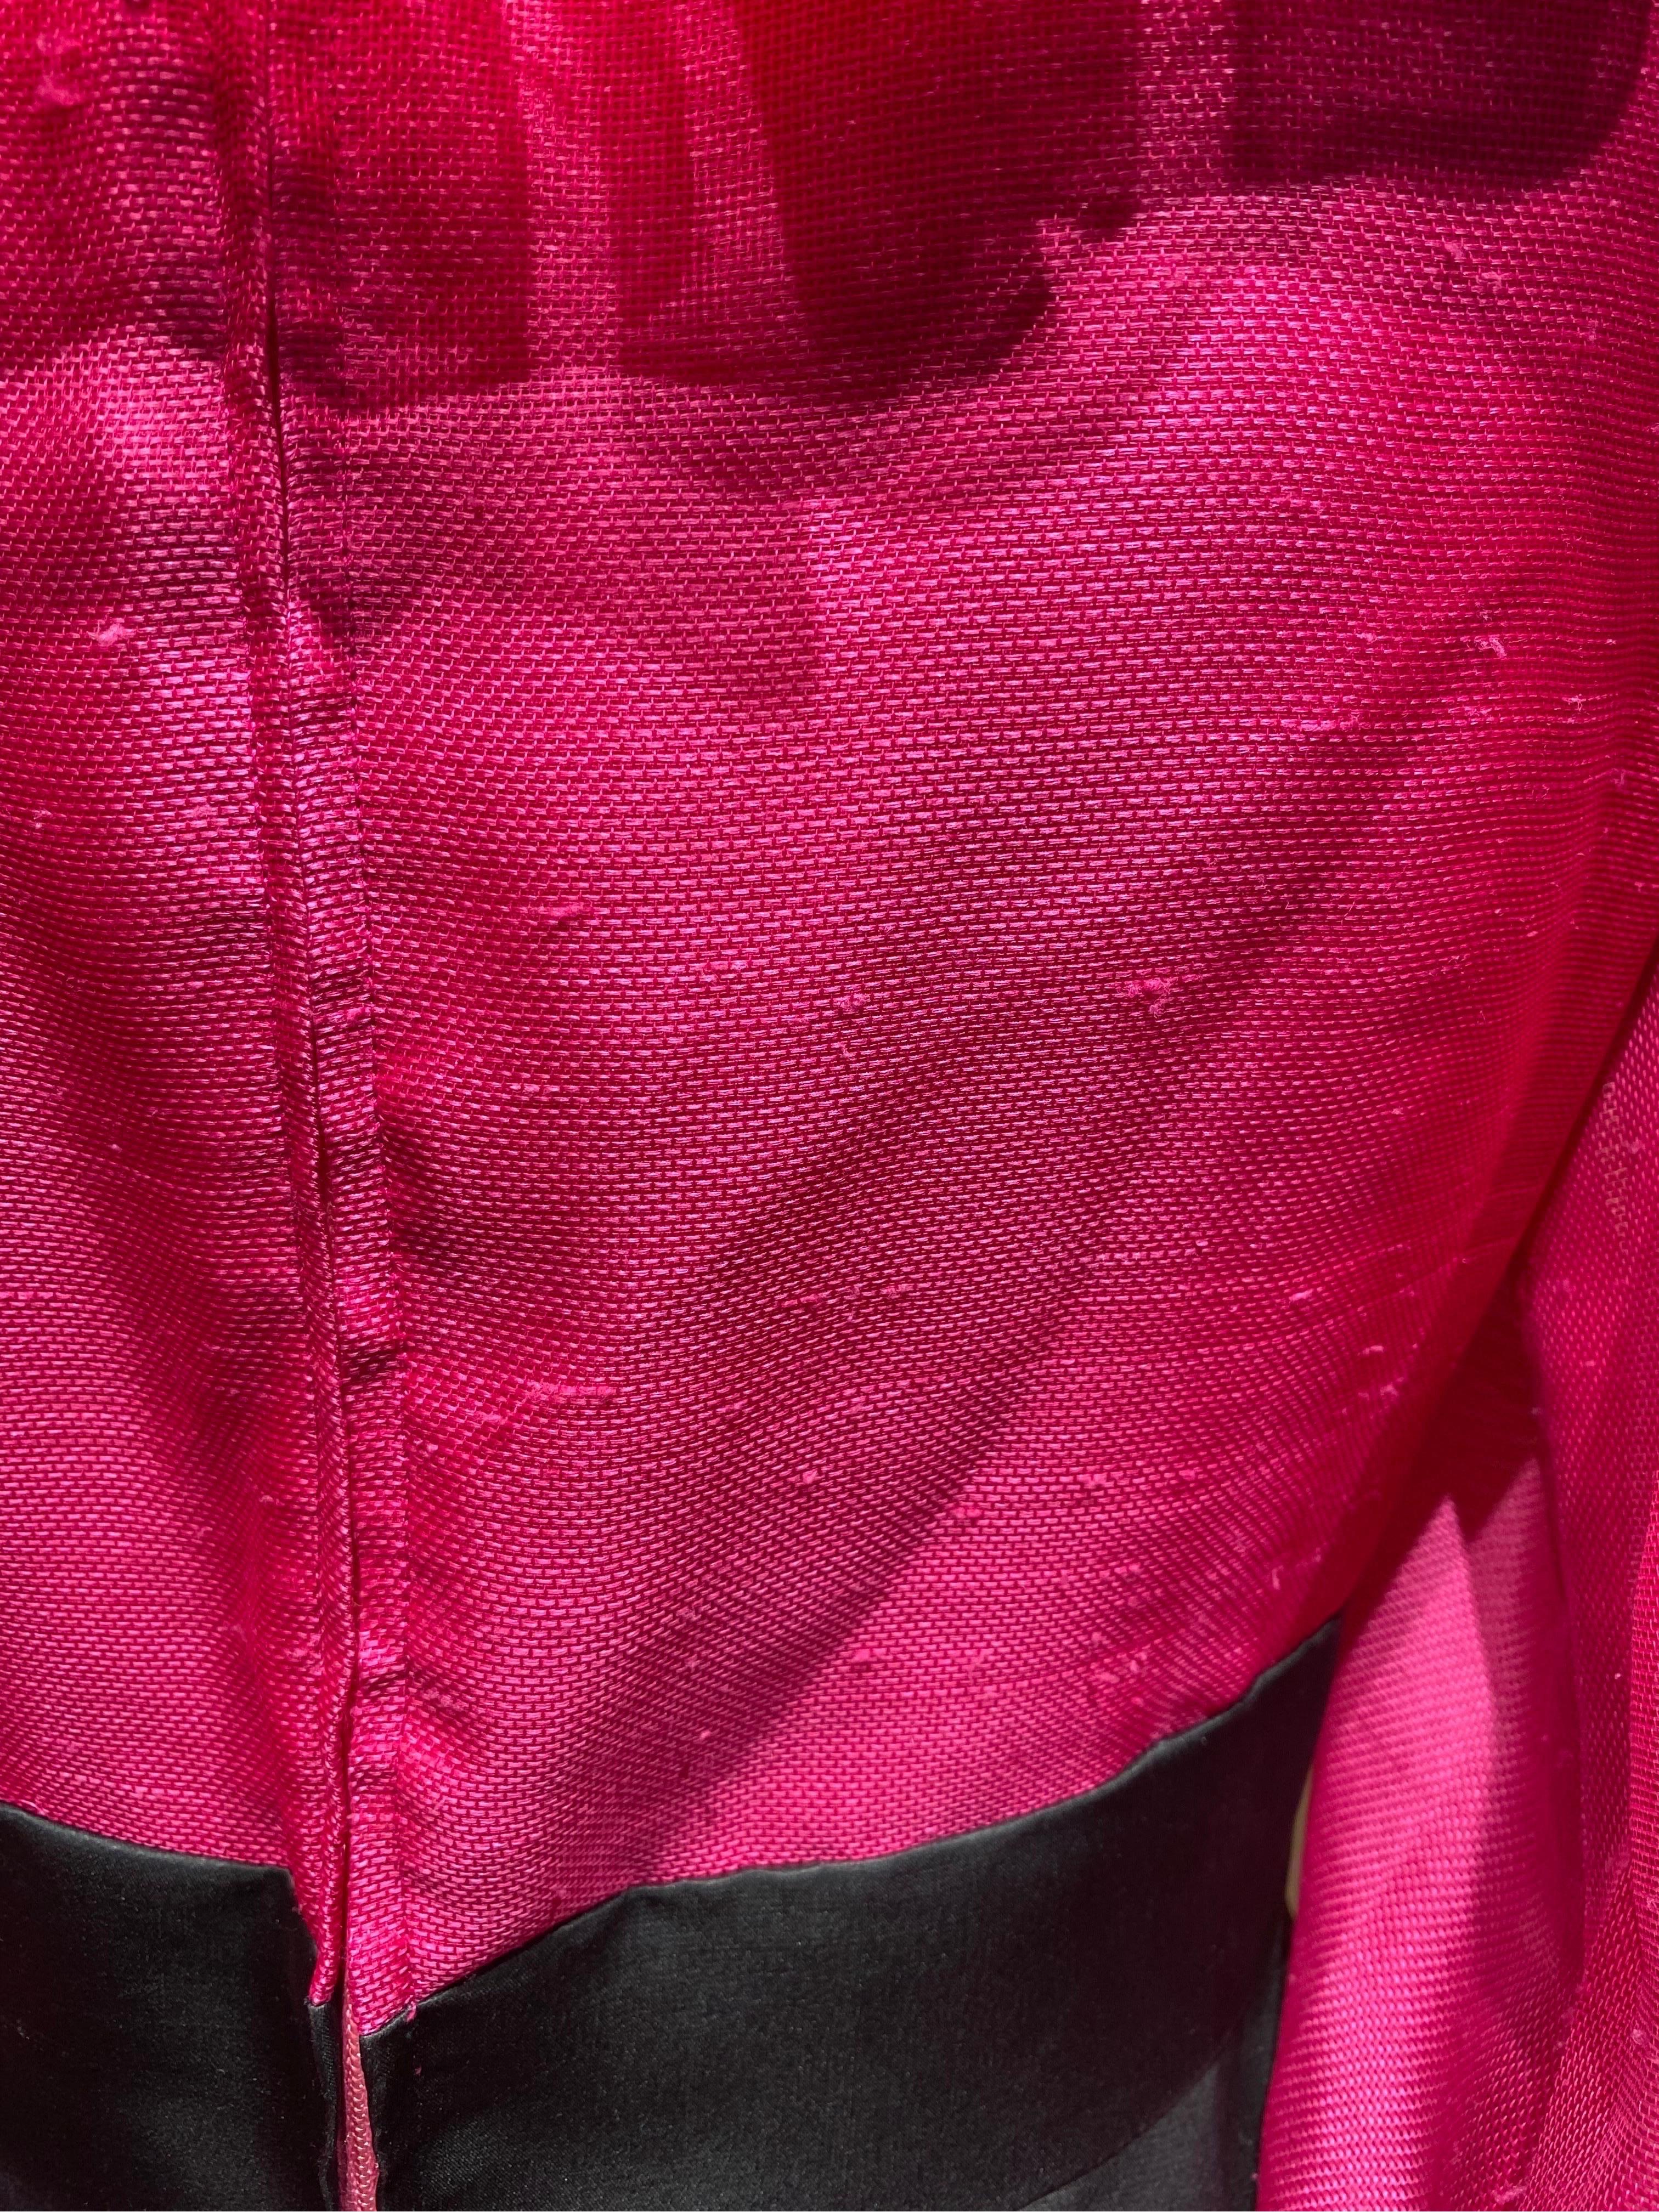 Oscar De La Renta Magenta Pink Silk Dress For Sale 5